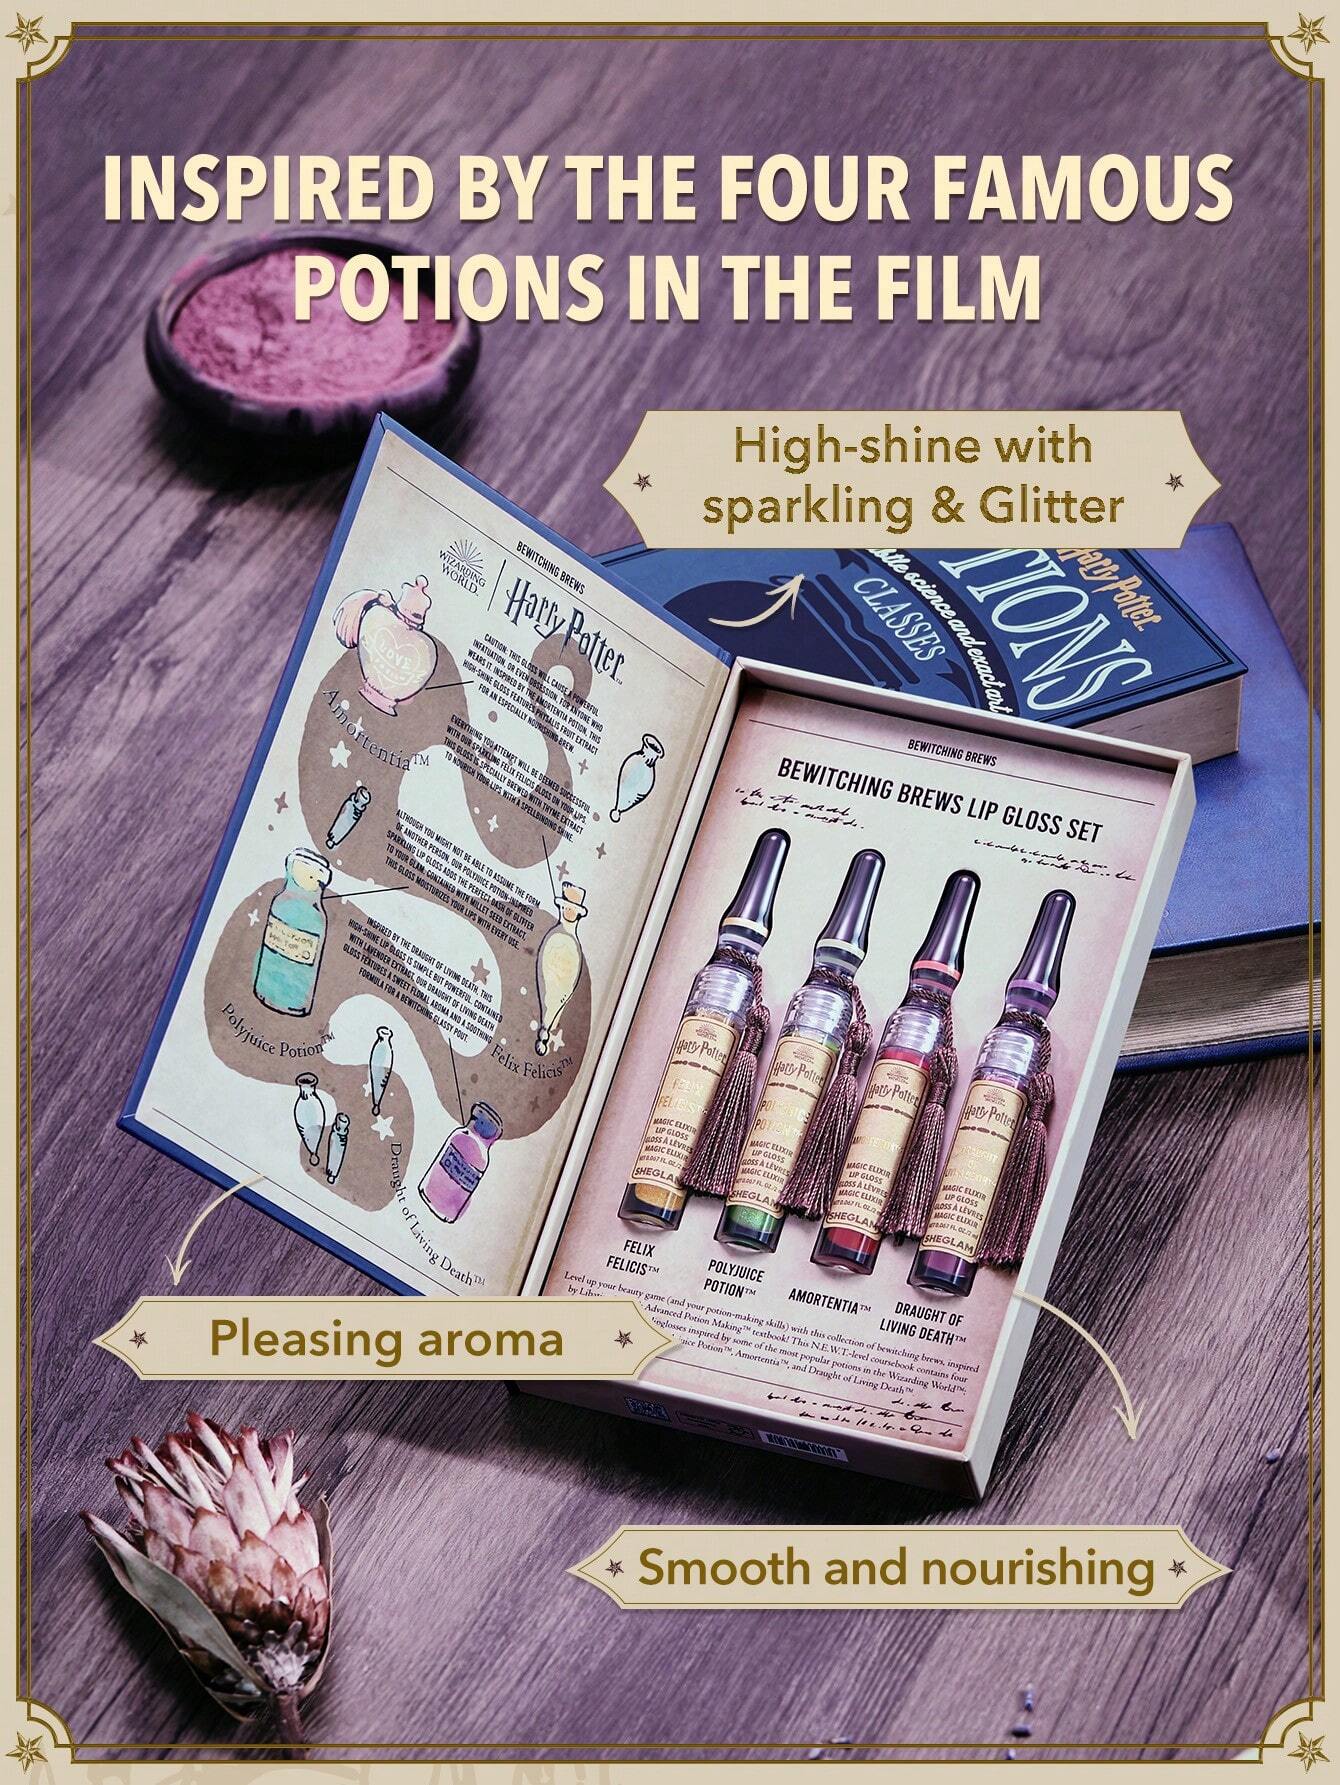 SHEGLAM Harry Potter™ Bewitching Brews Lip Gloss Set 4 Pcs